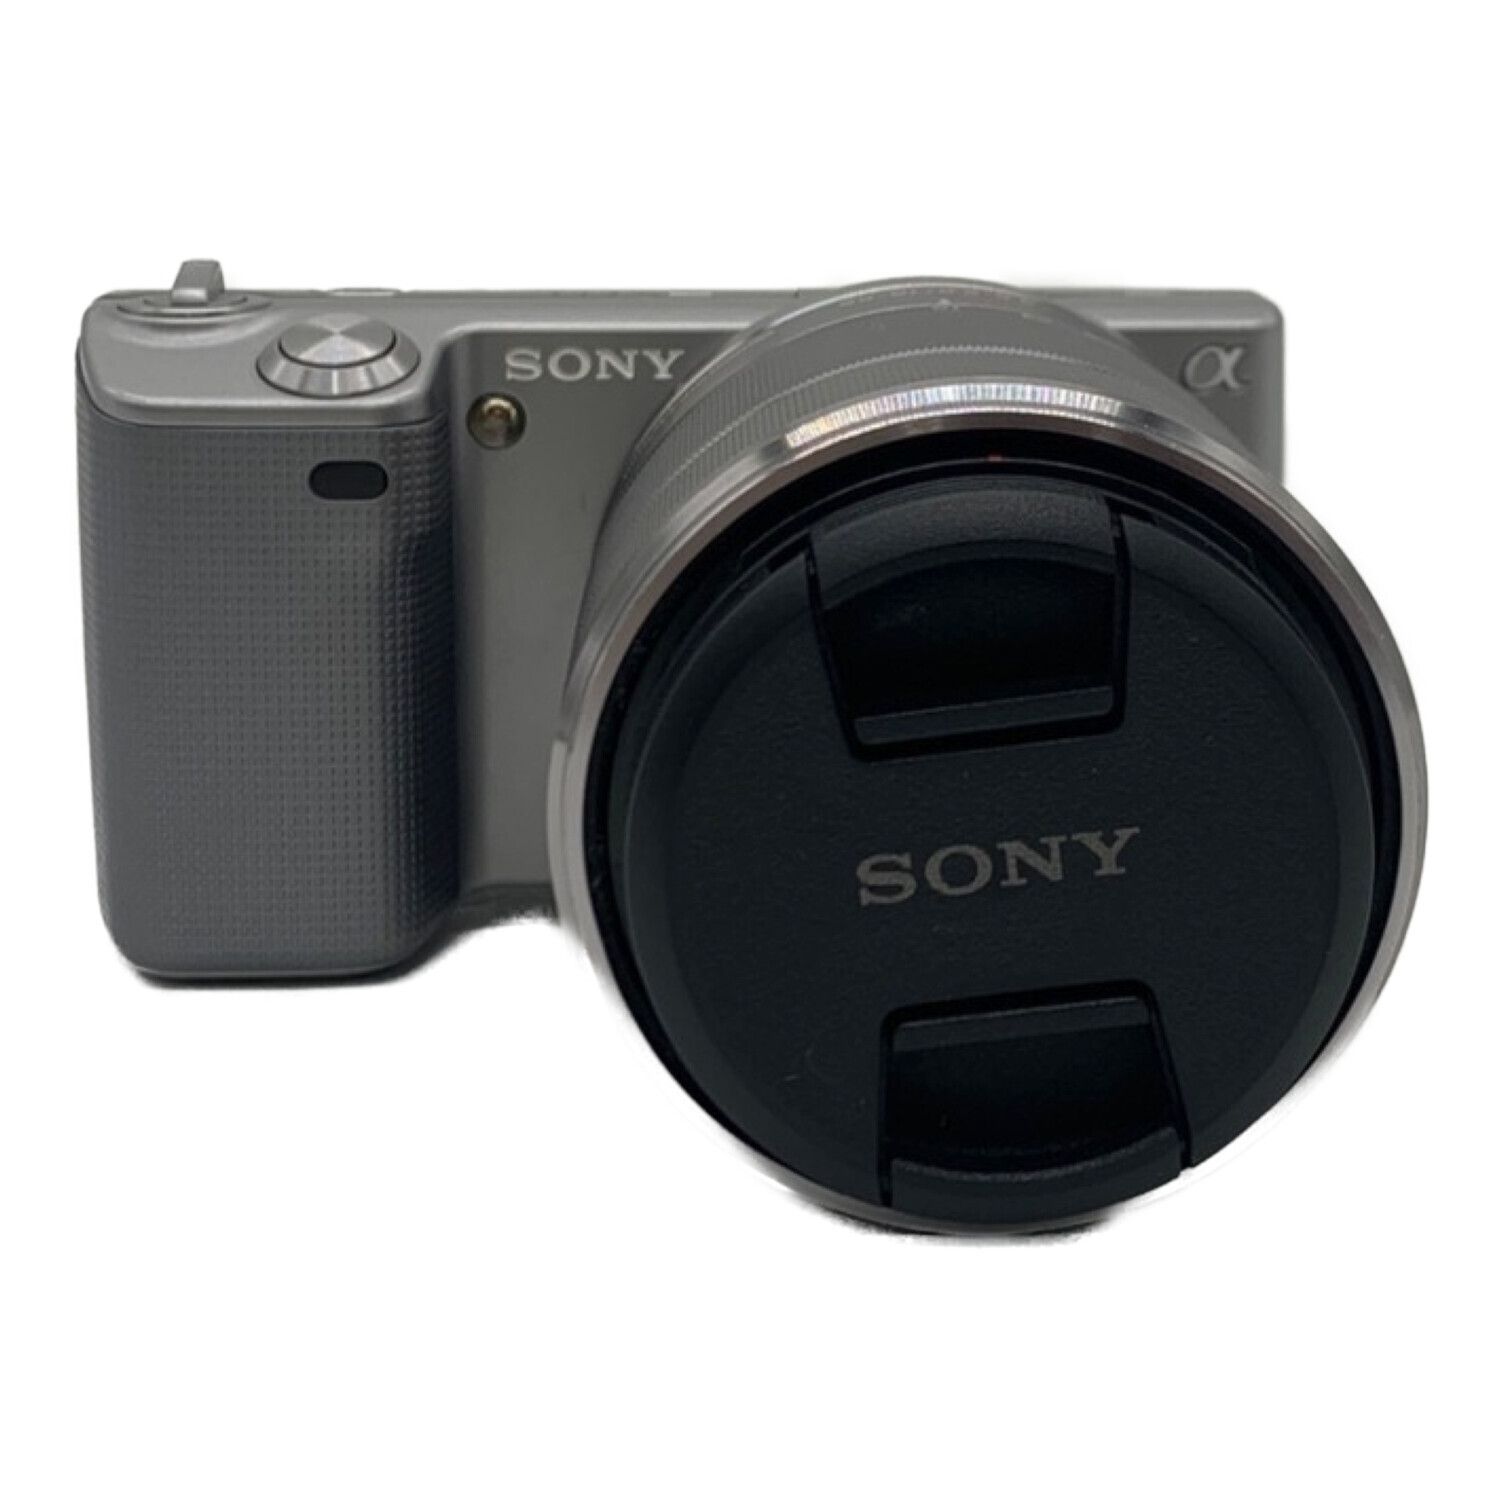 SONY (ソニー) デジタル一眼レフカメラ NEX-5D 1420万画素 専用電池 ...